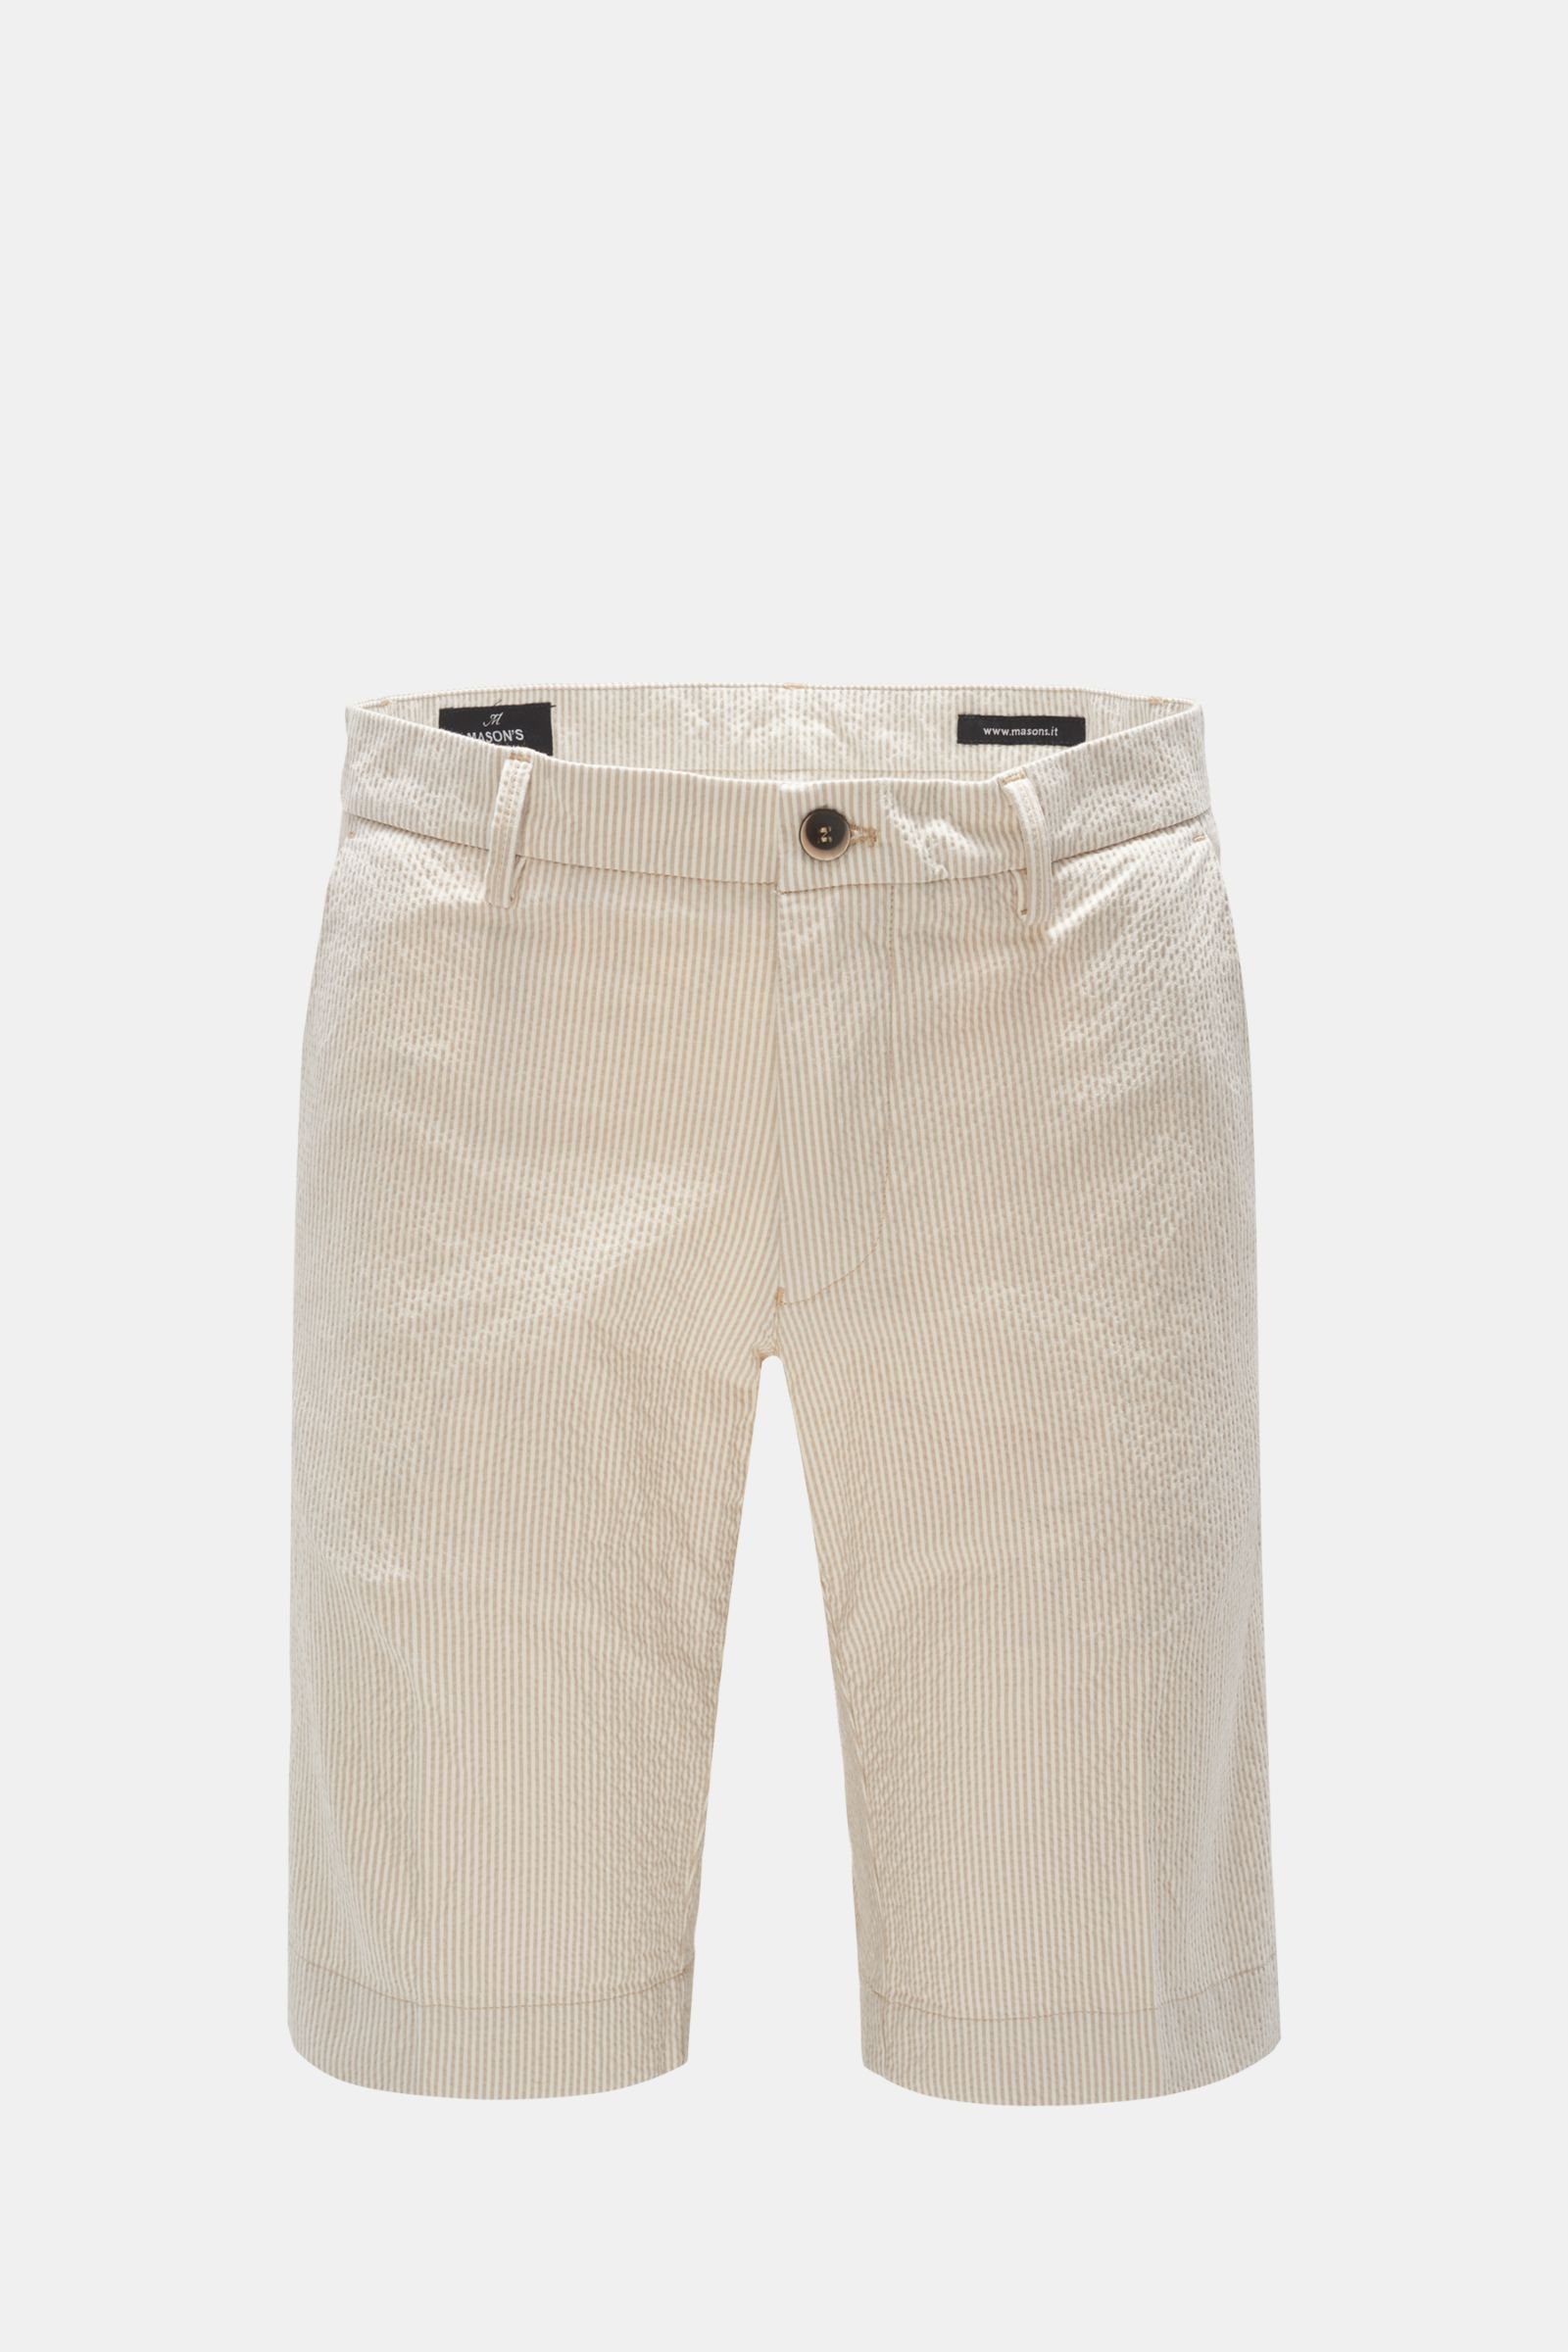 Seersucker bermuda shorts 'Torino' beige and white stripes